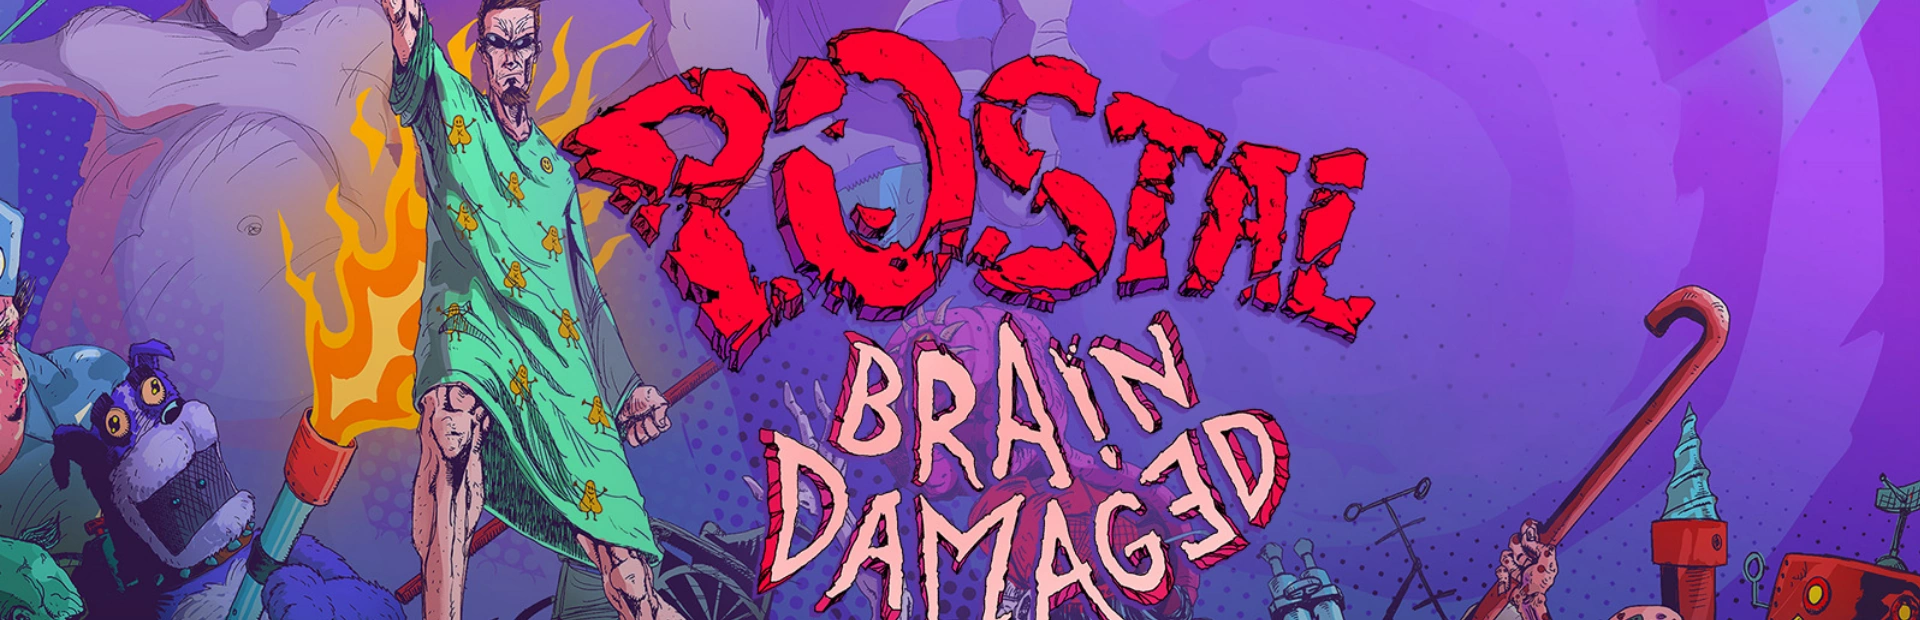 POSTAL Brain.Damage.banner1